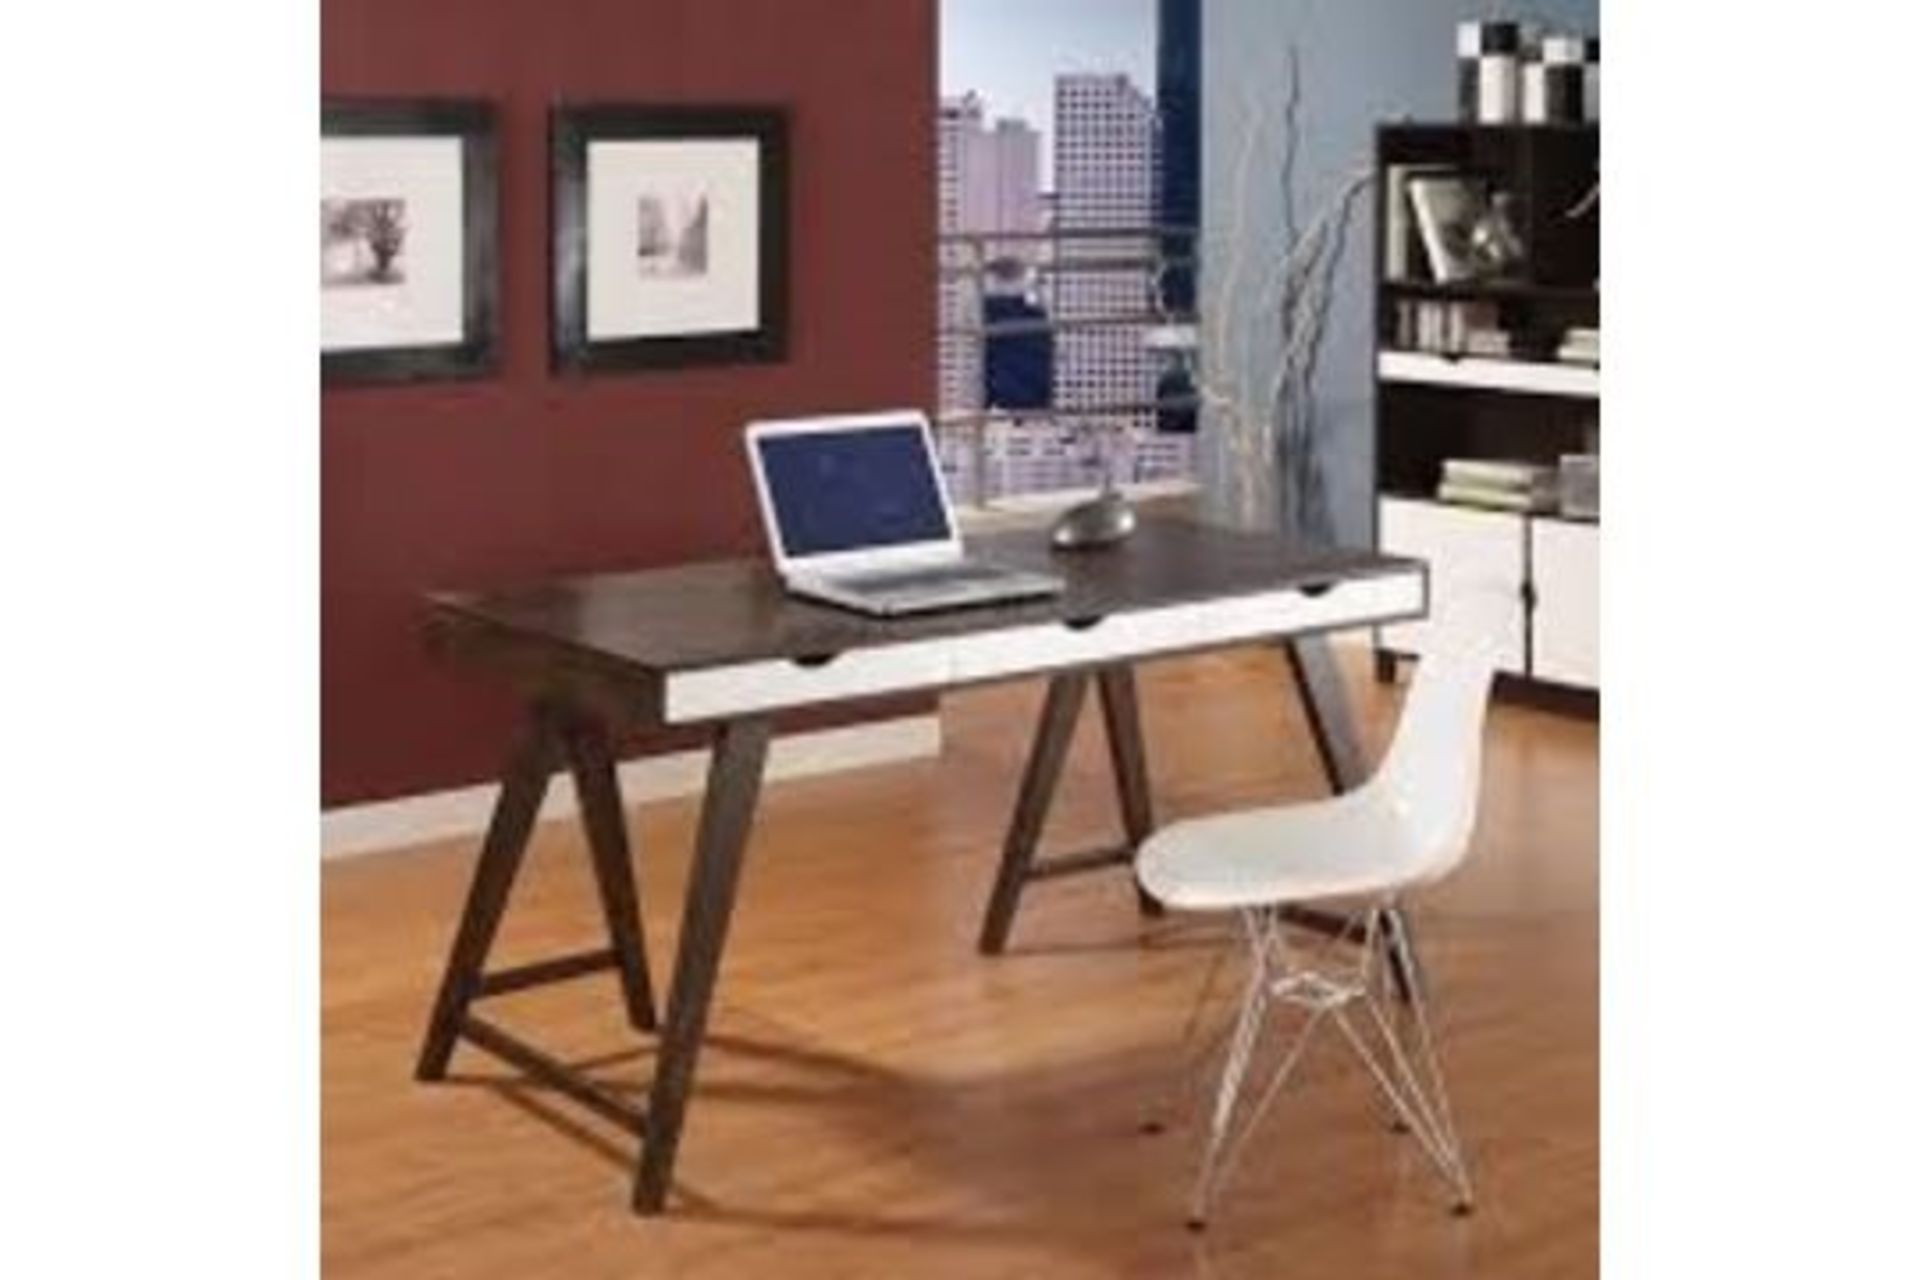 1 x Blue Suntree Ellwood Trestle Desk With a Dark Walnut Finish and Three White Storage Drawers - - Image 2 of 2